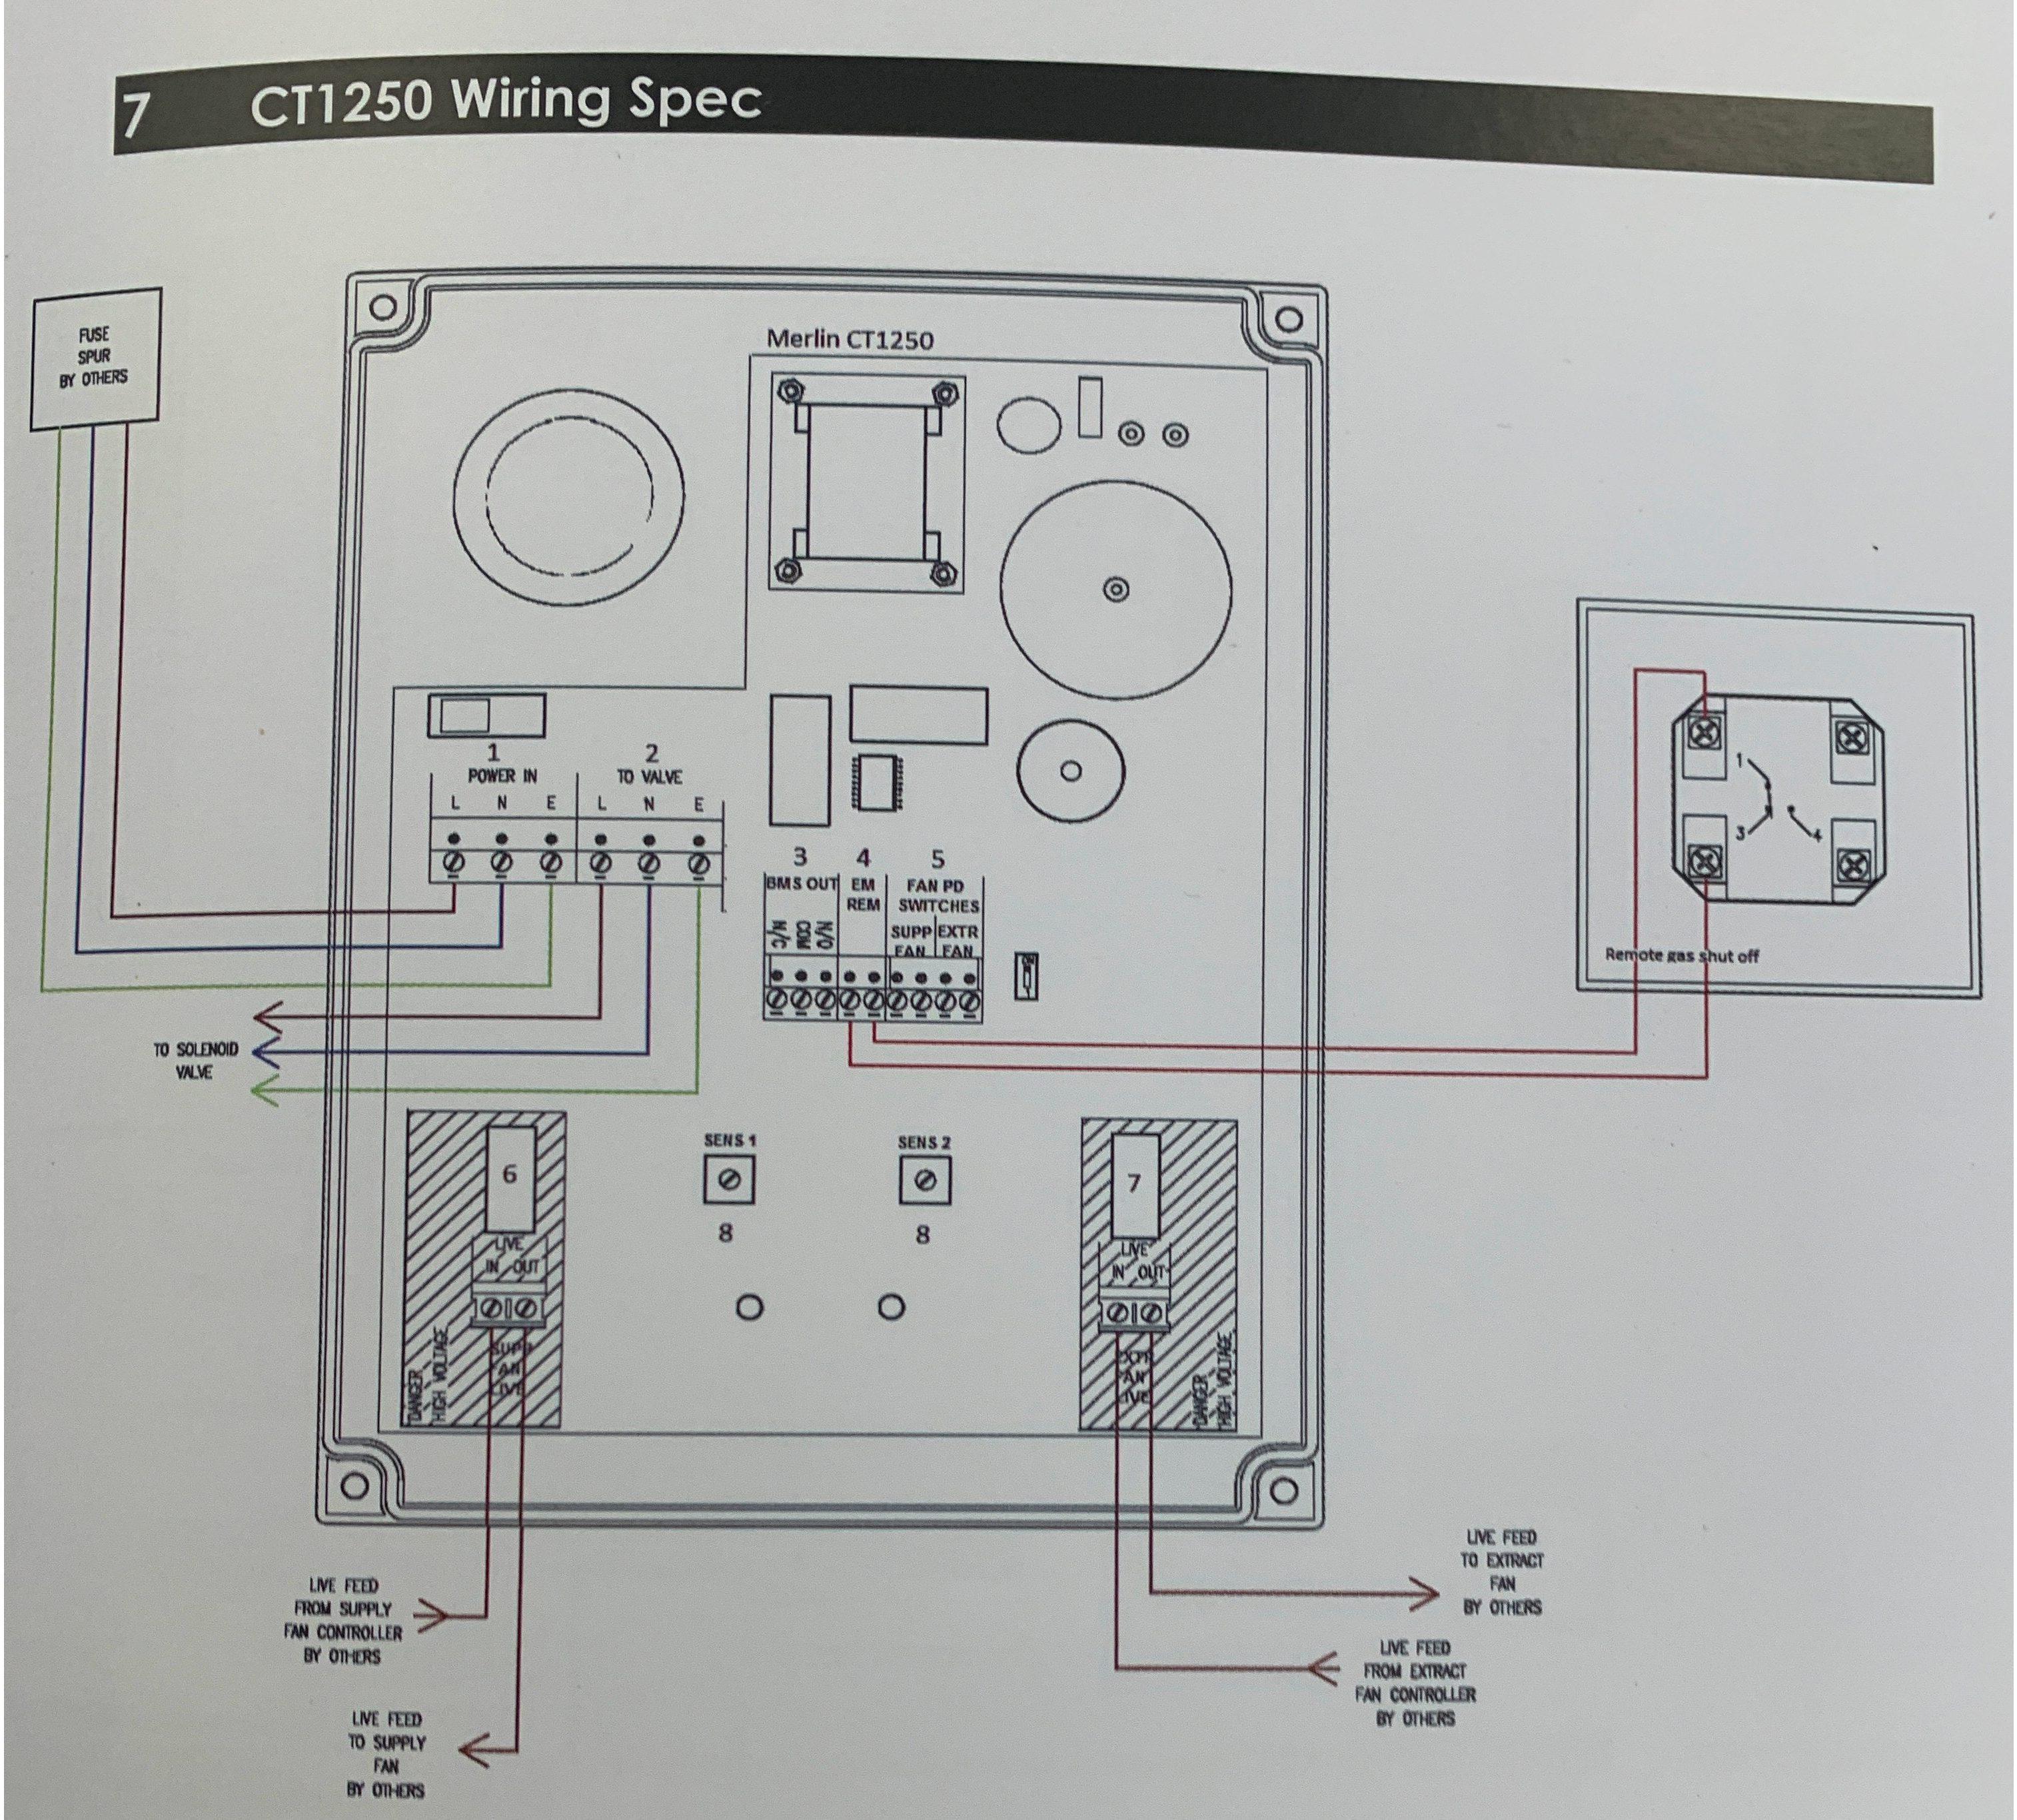 Merlin CT1250 Gas / Ventilation Interlock by S&S Northern